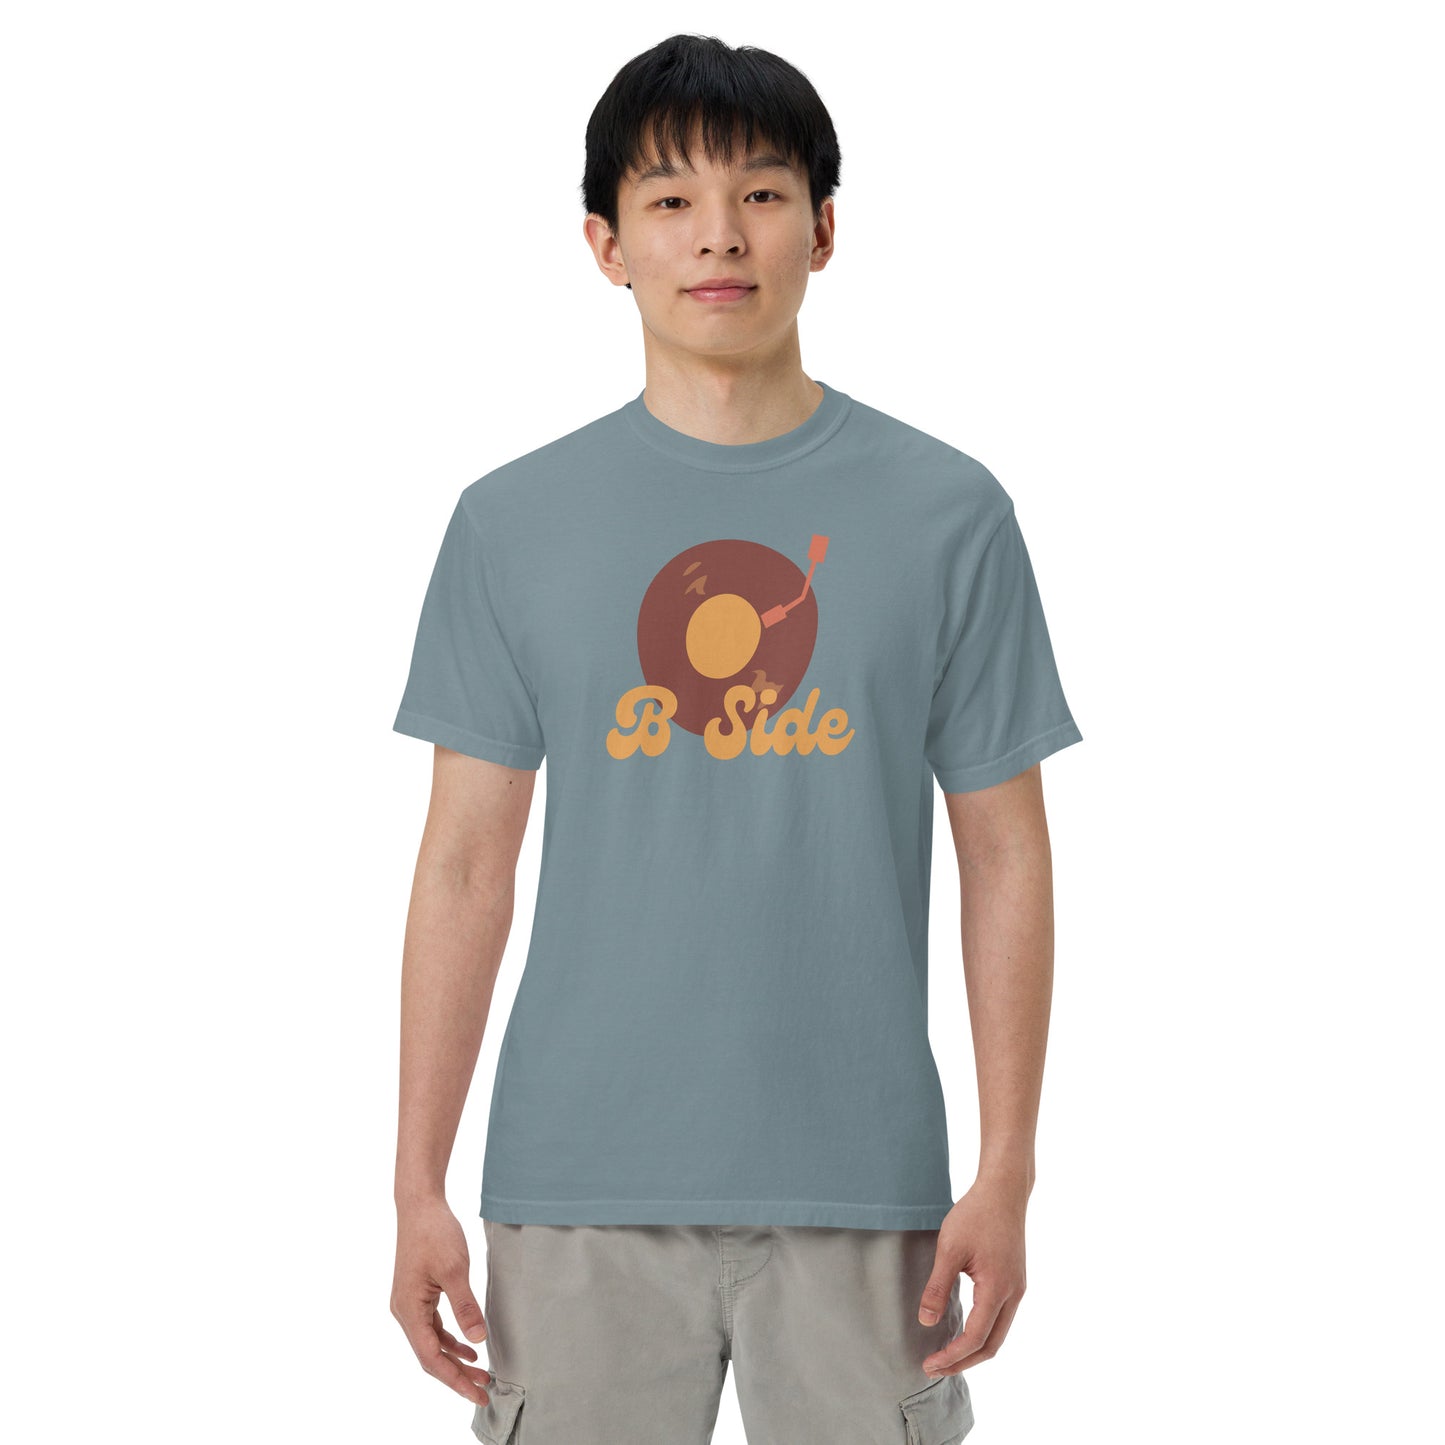 B Side Men’s Comfort Colors T-Shirt